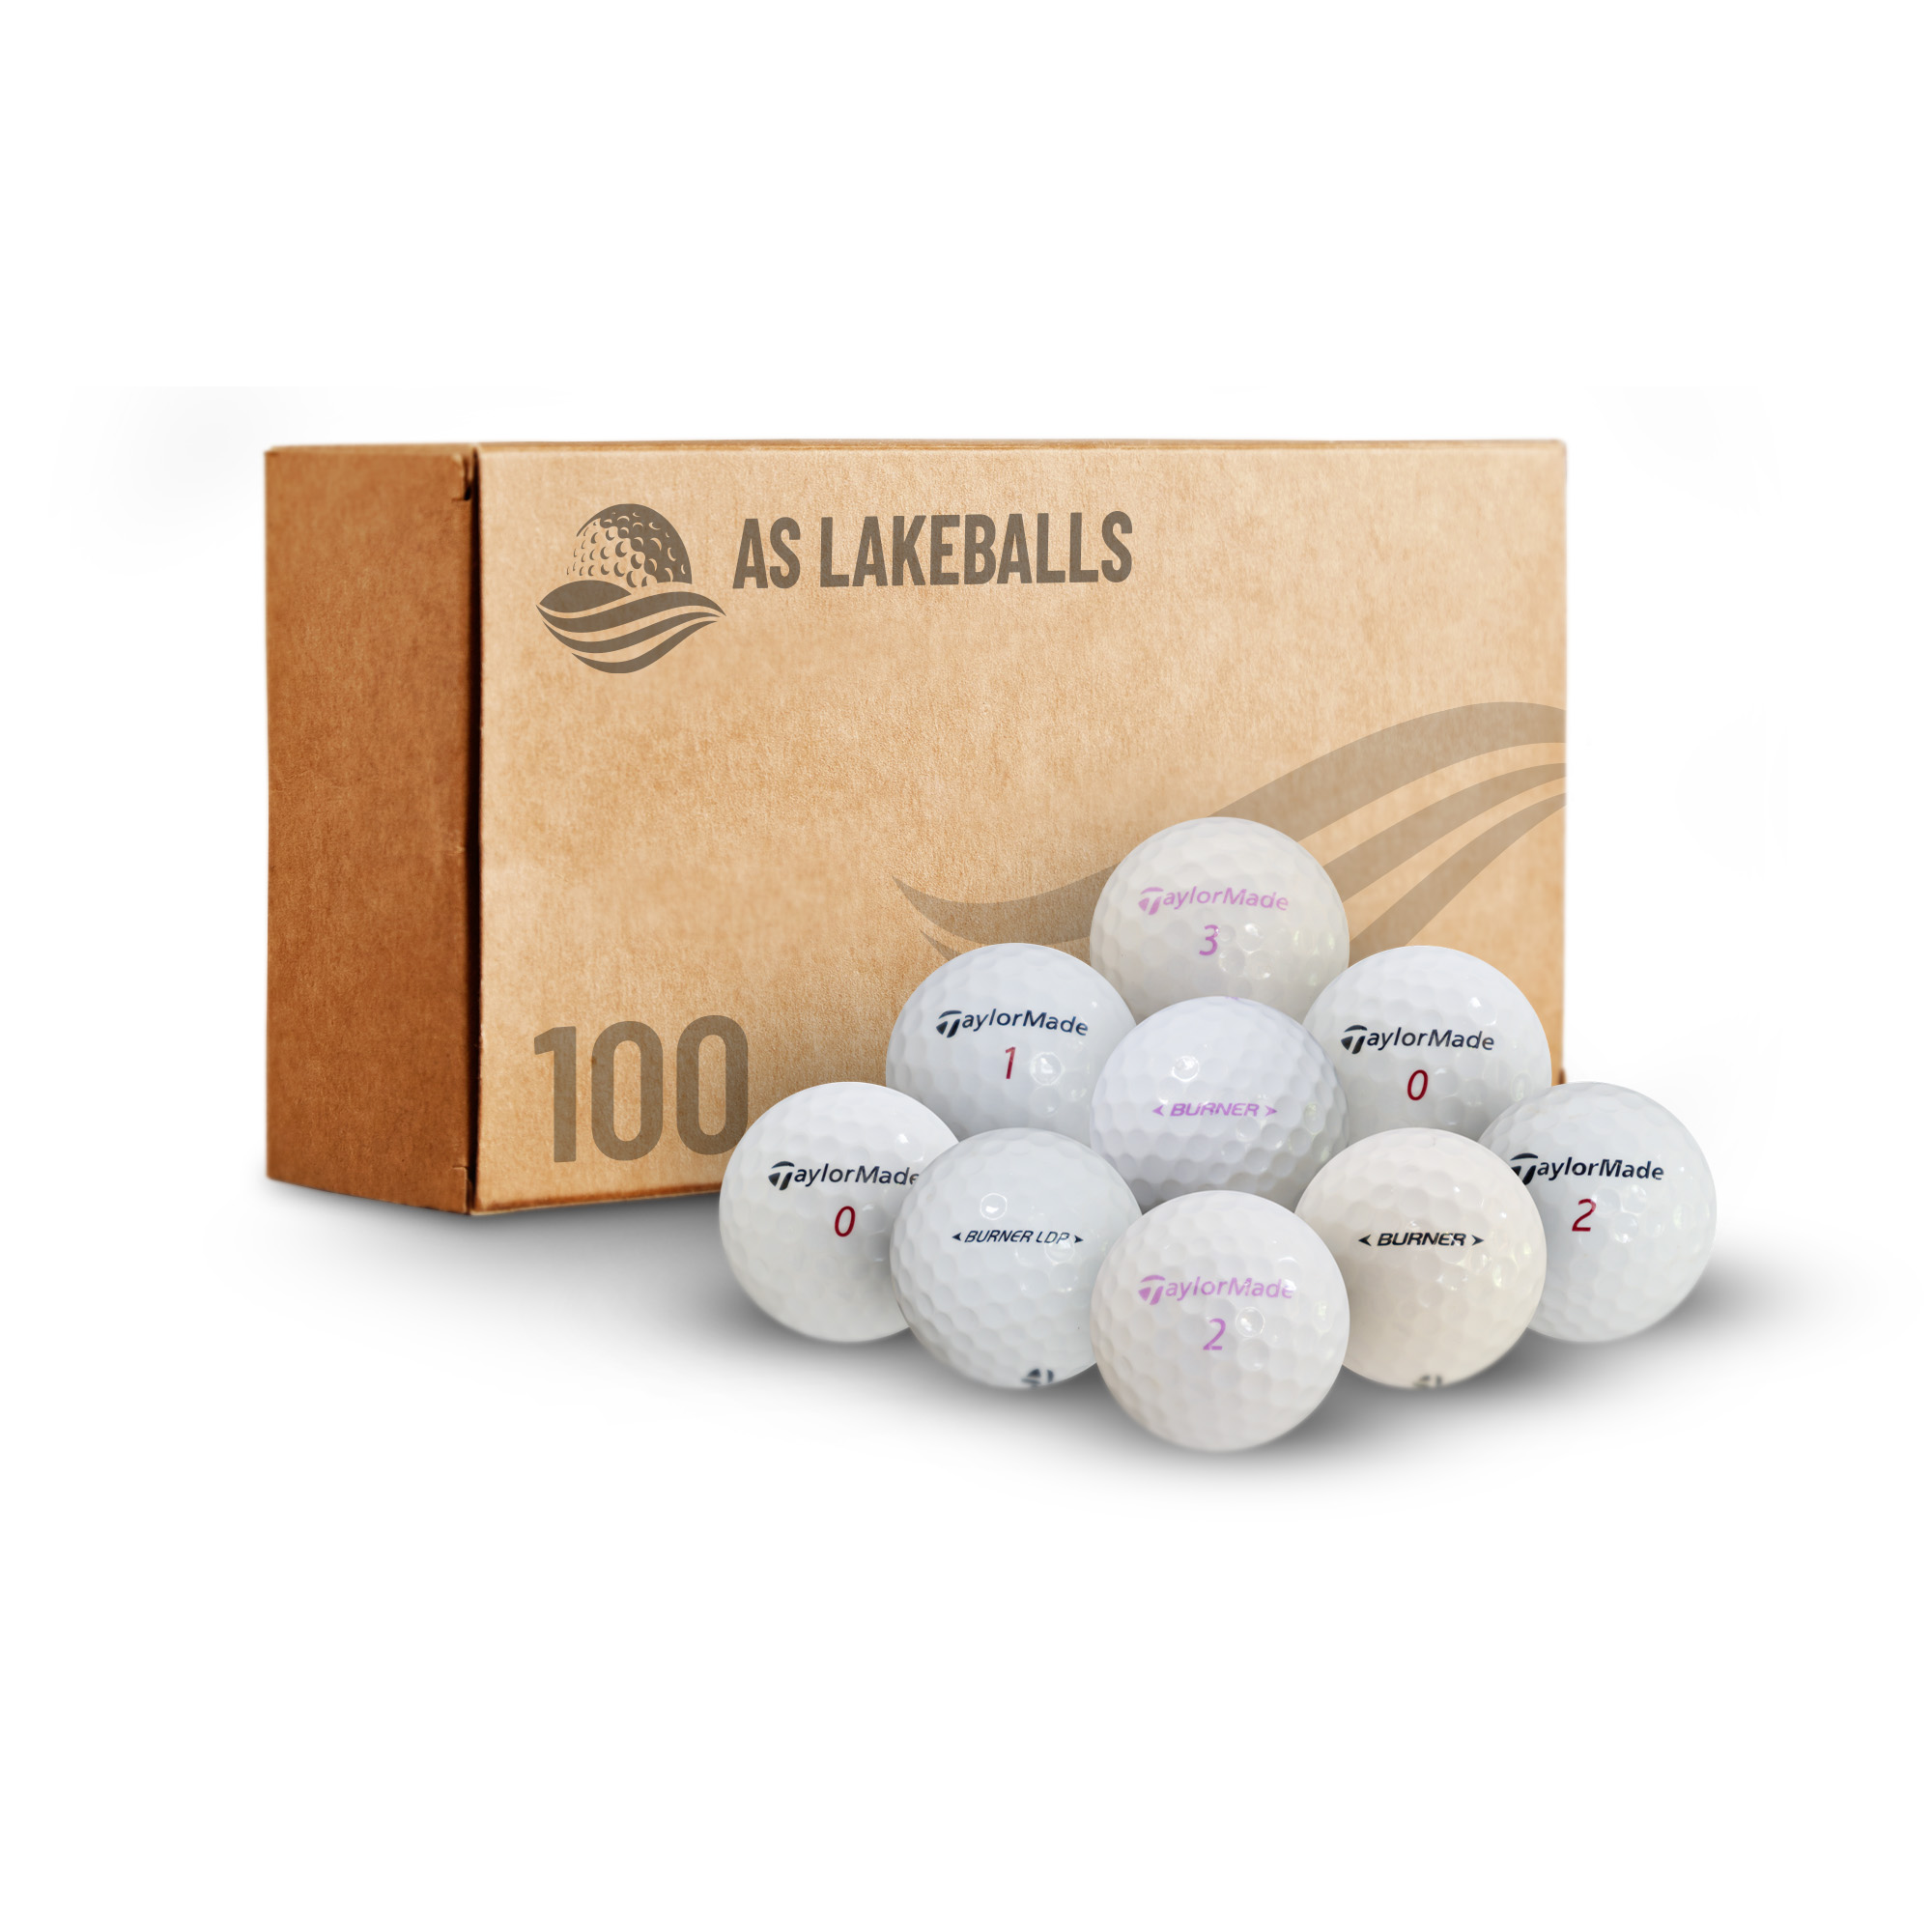 100 Stück Taylor Made Burner Mix AAA-AA Lakeballs bei AS Lakeballs günstig kaufen